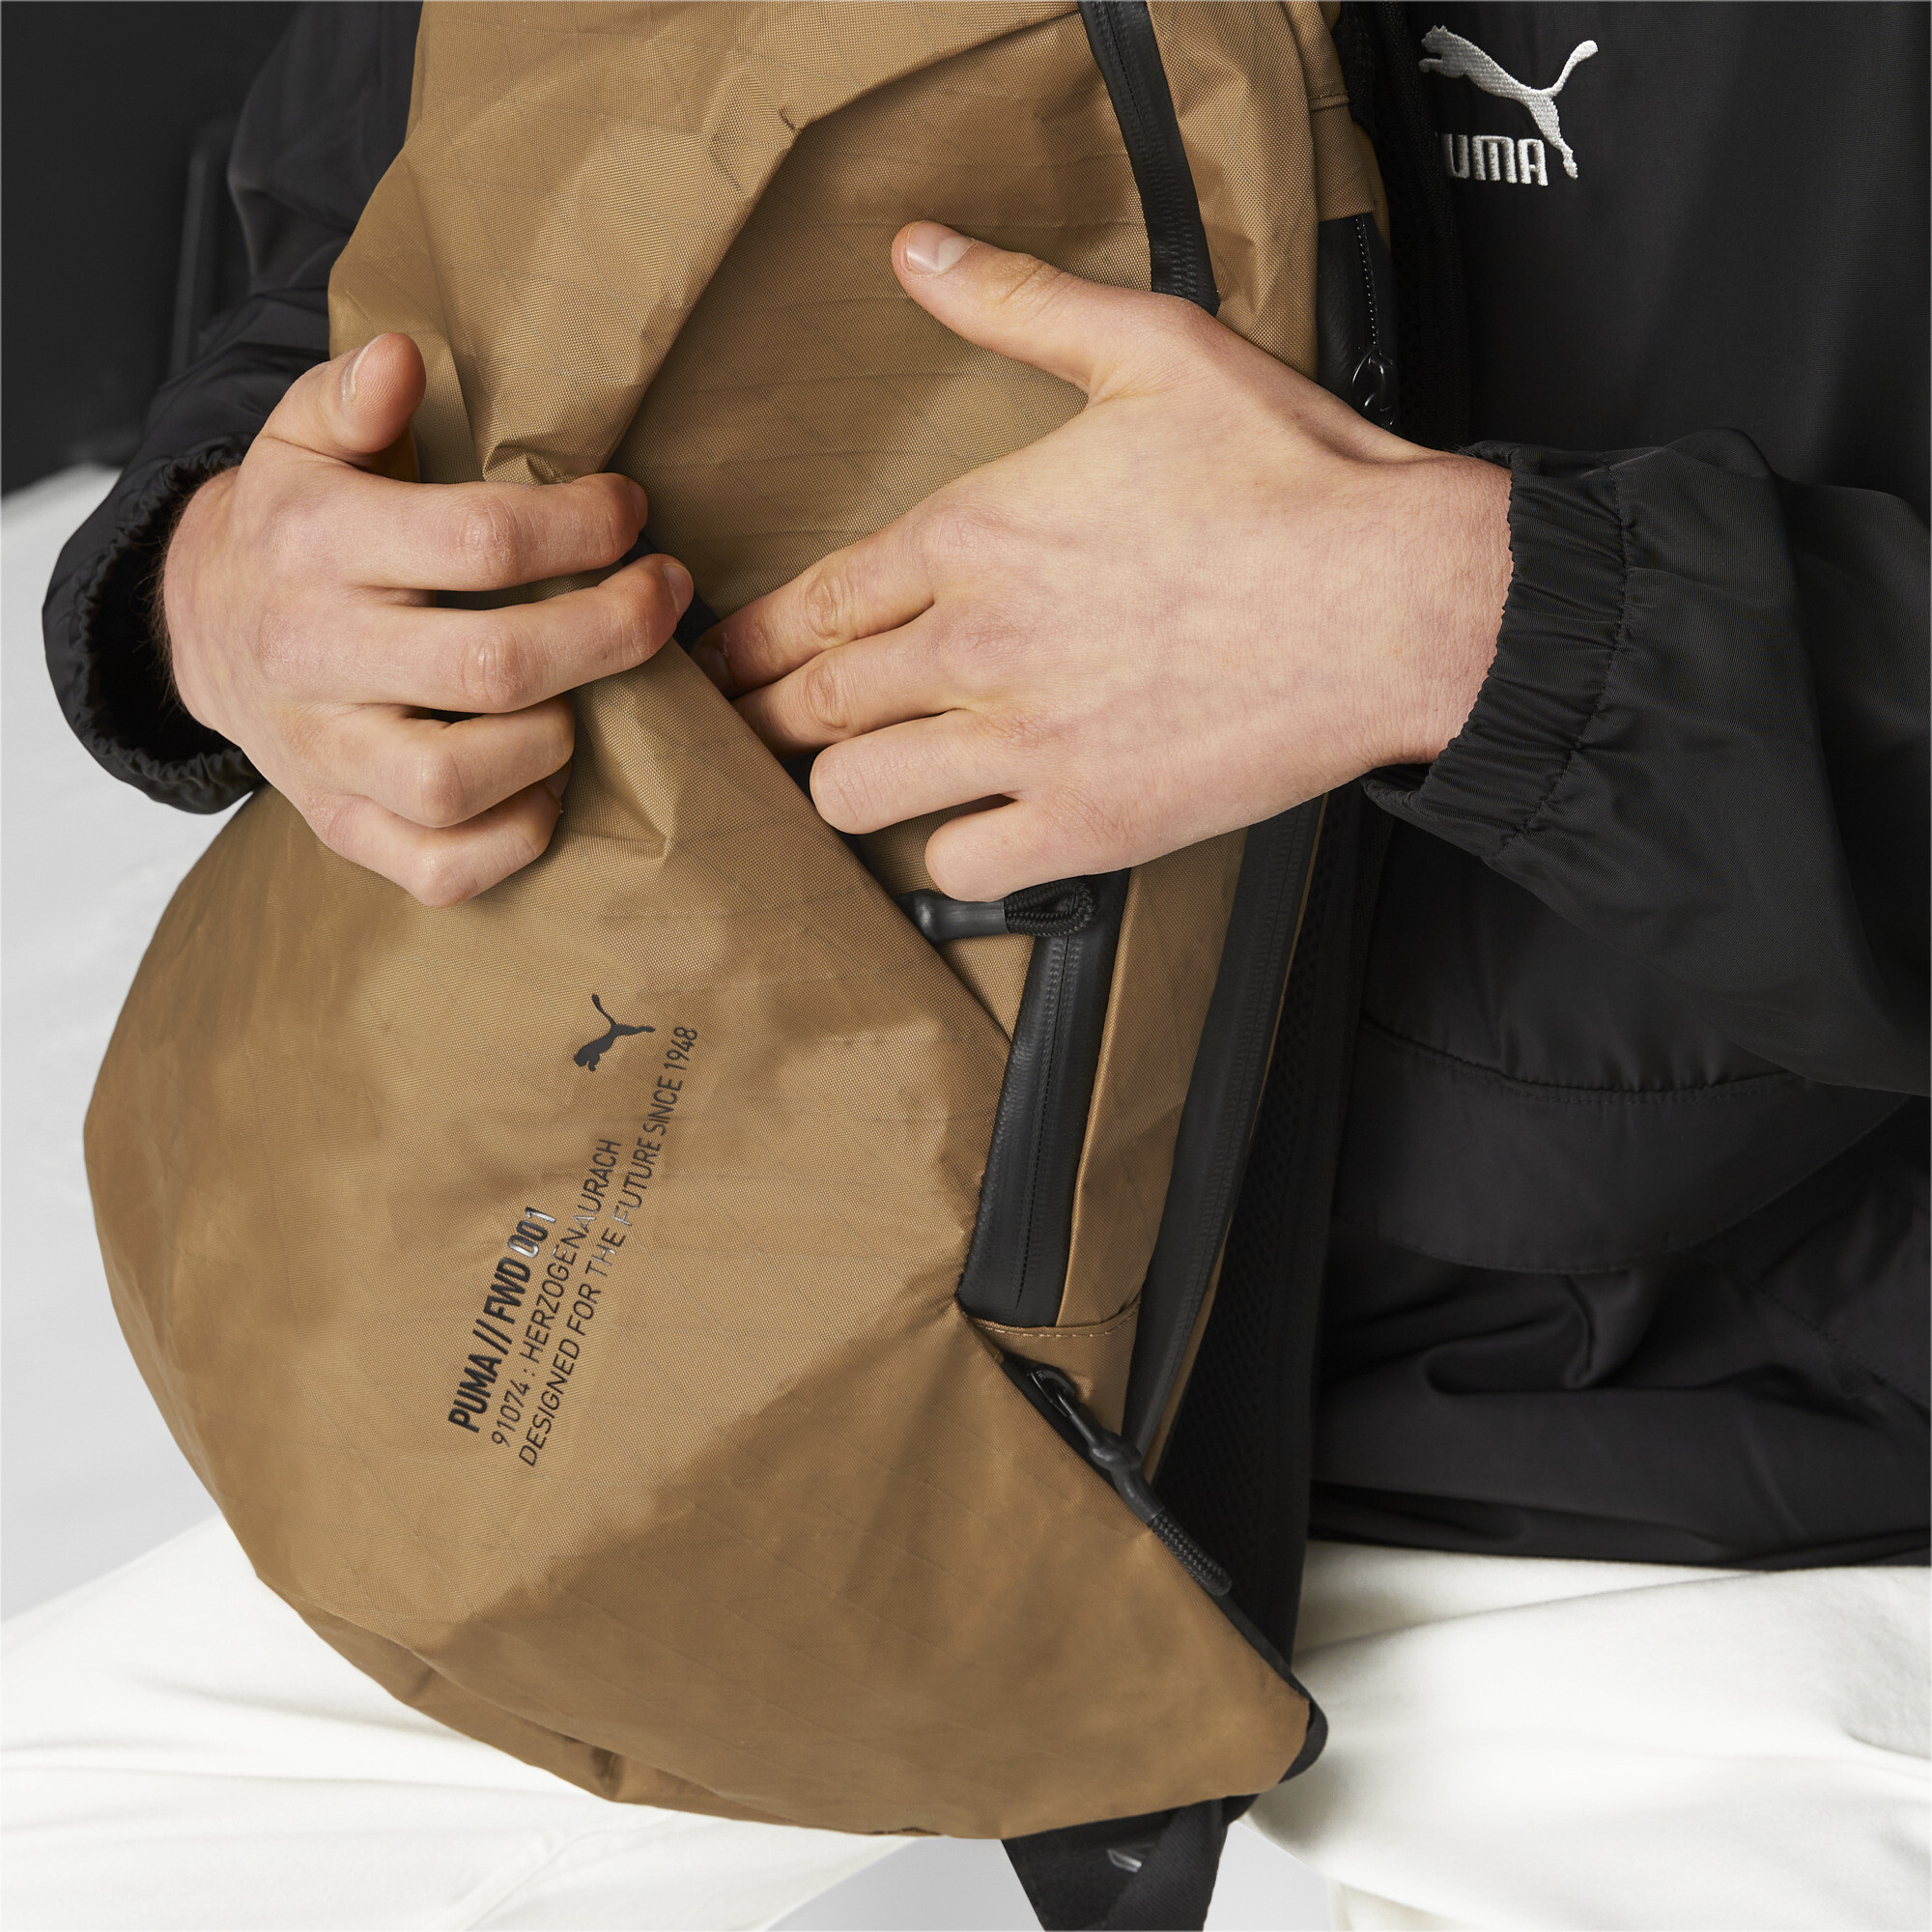 Men's Puma FWD Backpack, Brown, Accessories